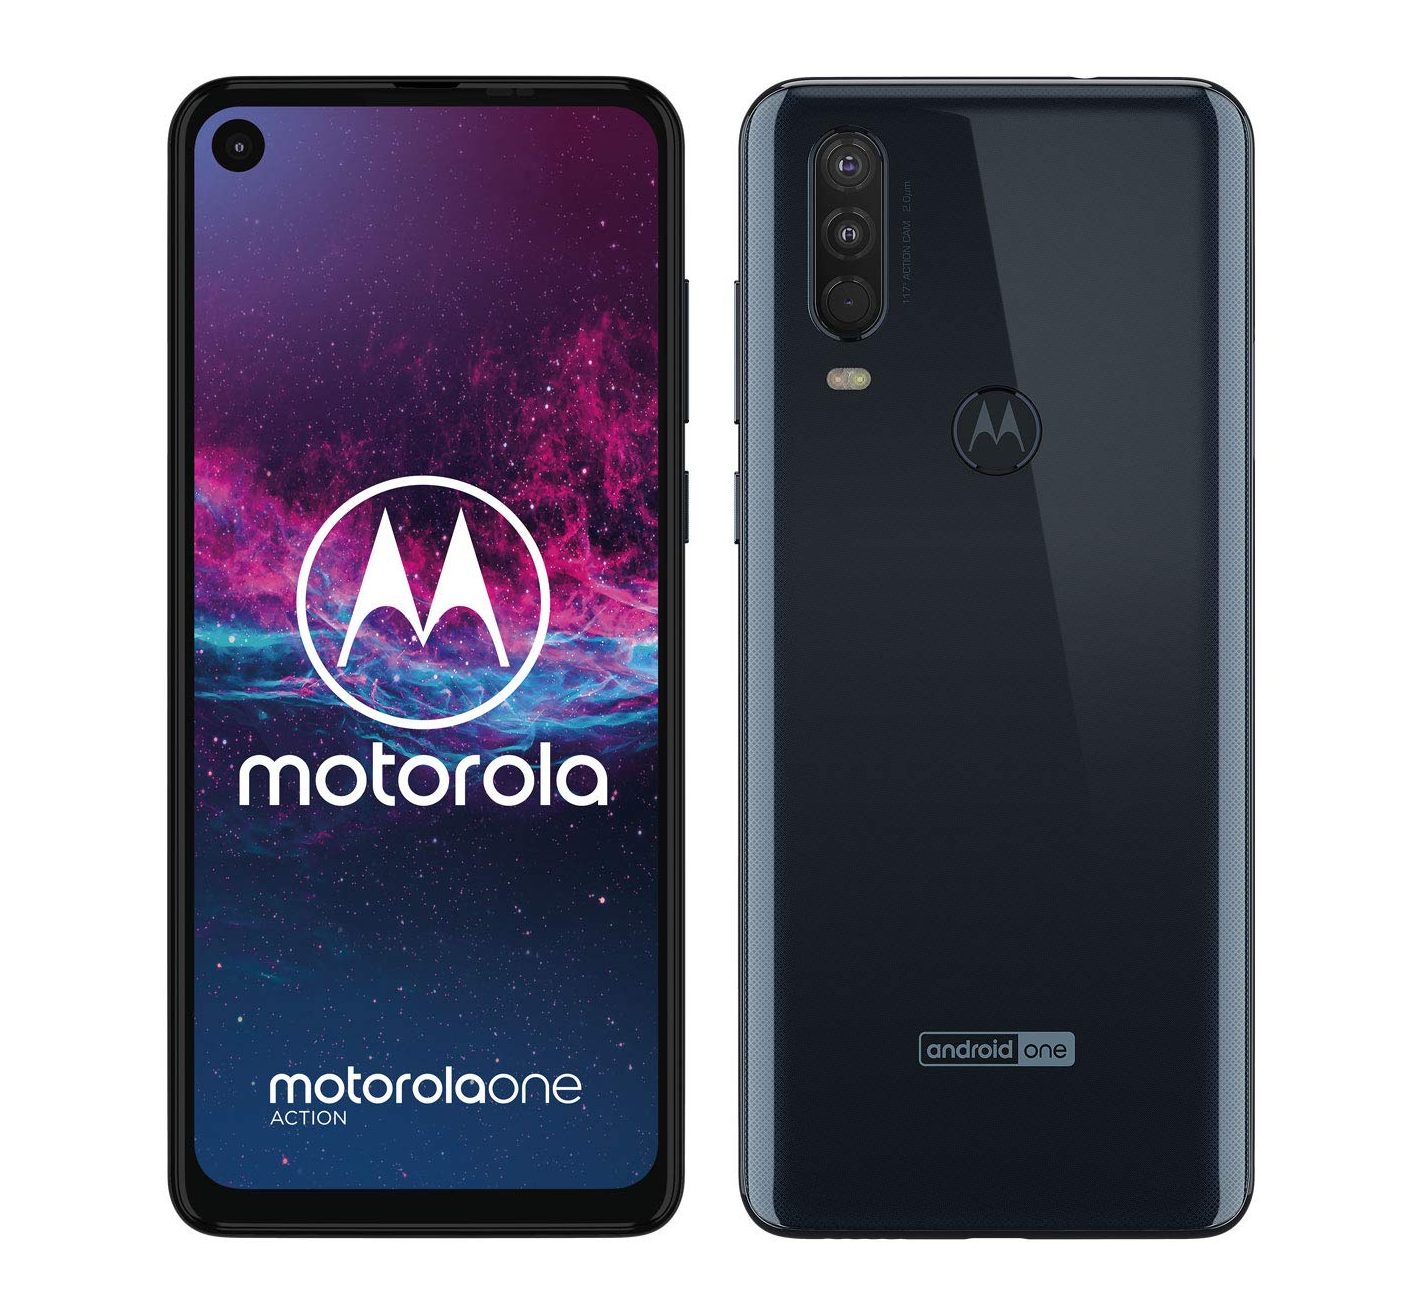 Smartphone Motorola in offerta